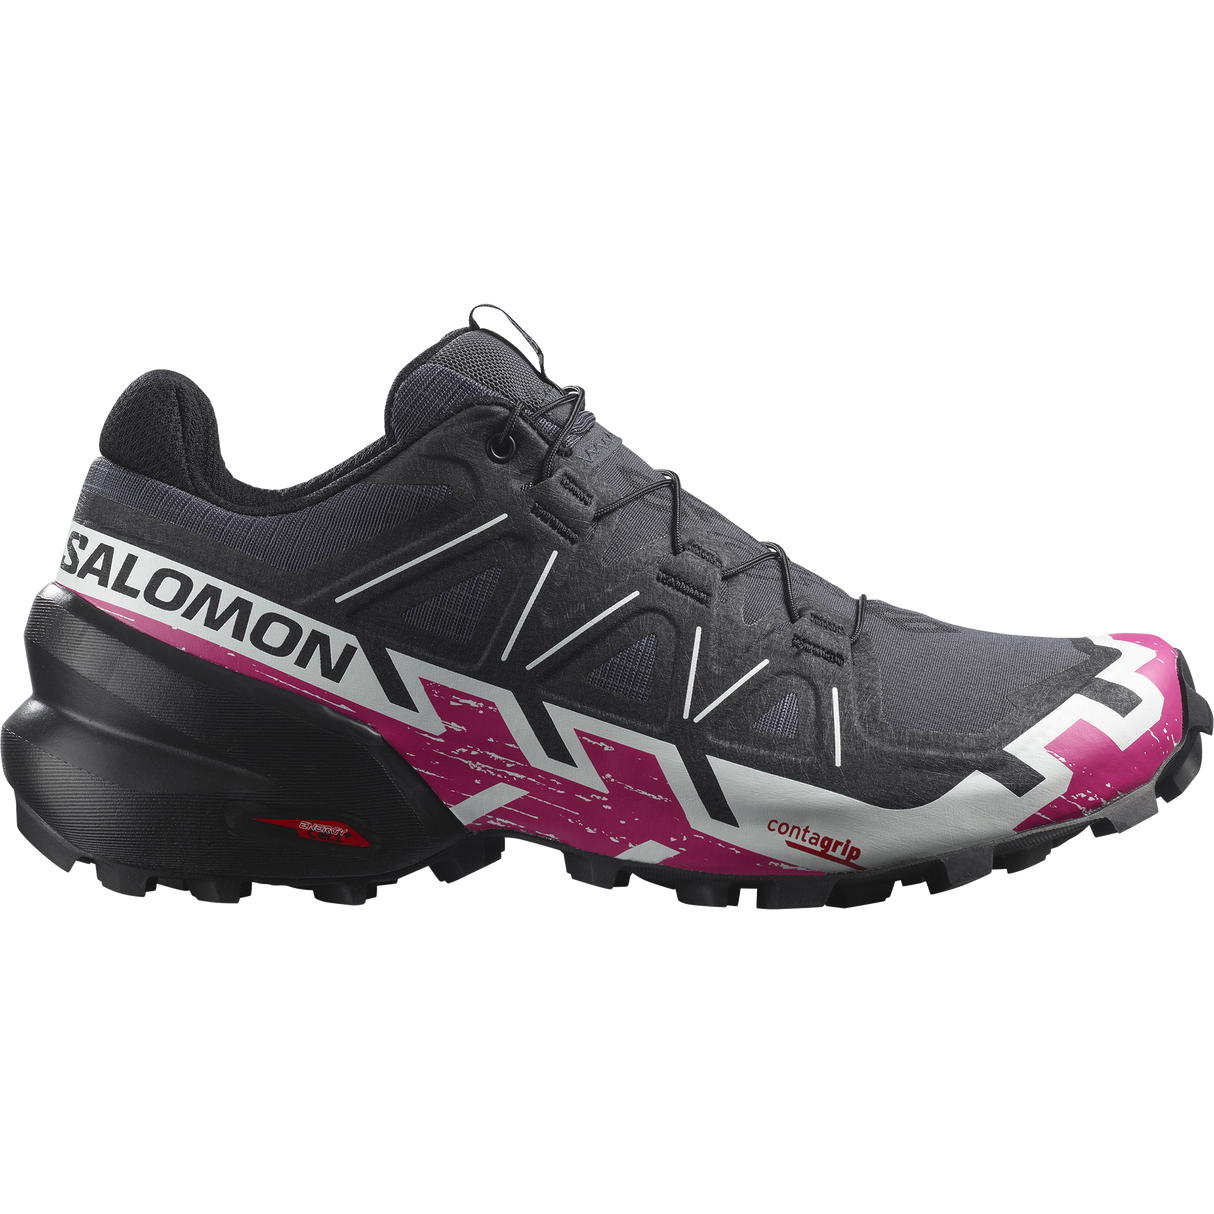 SALOMON Women's Trail Running Shoes, Grey Arctic